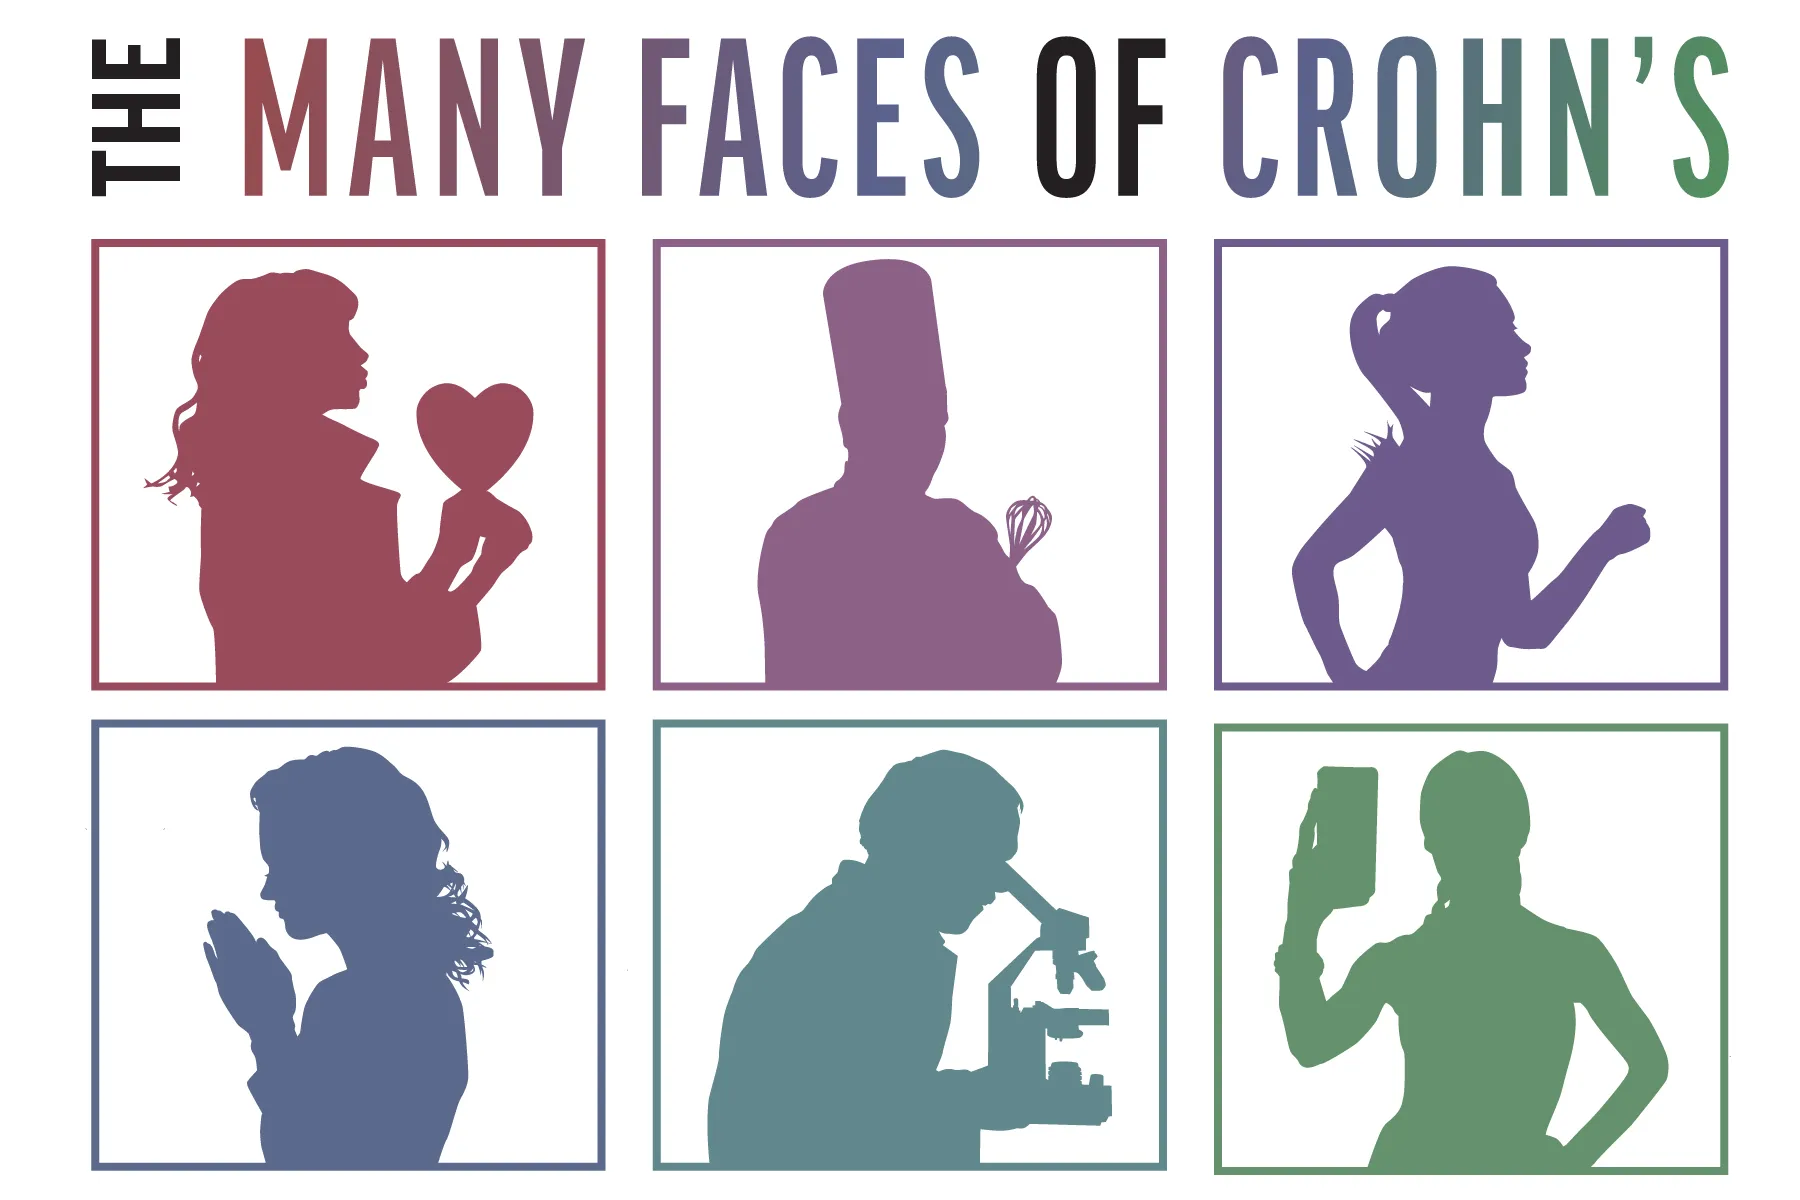 The Many Faces of Crohn’s